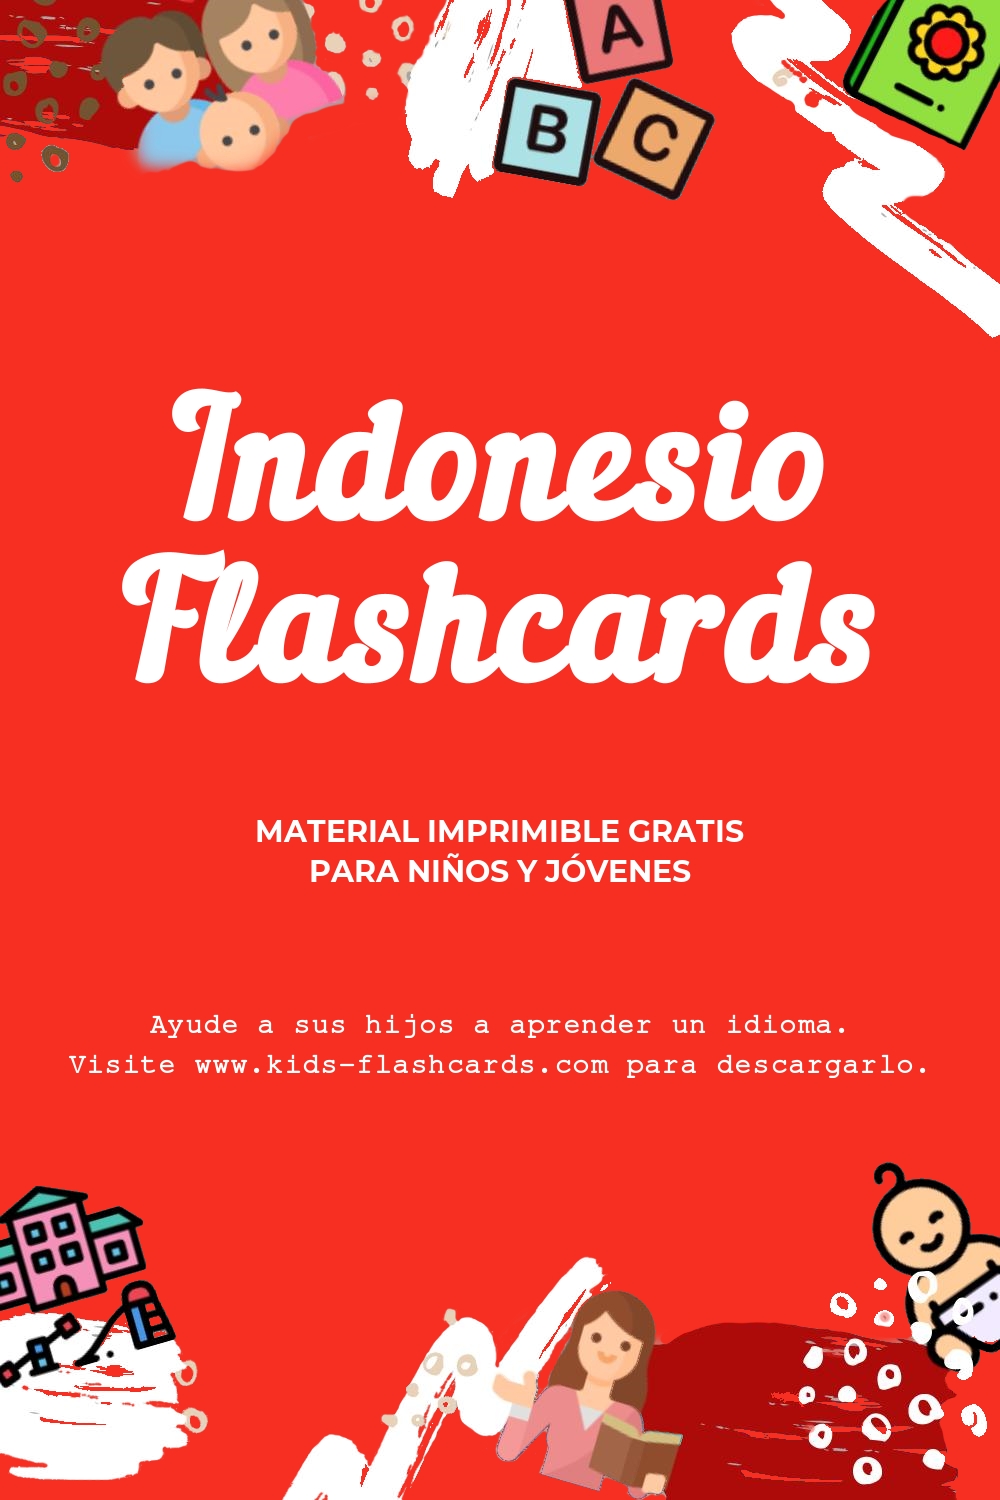 Fichas para aprender Indonesio